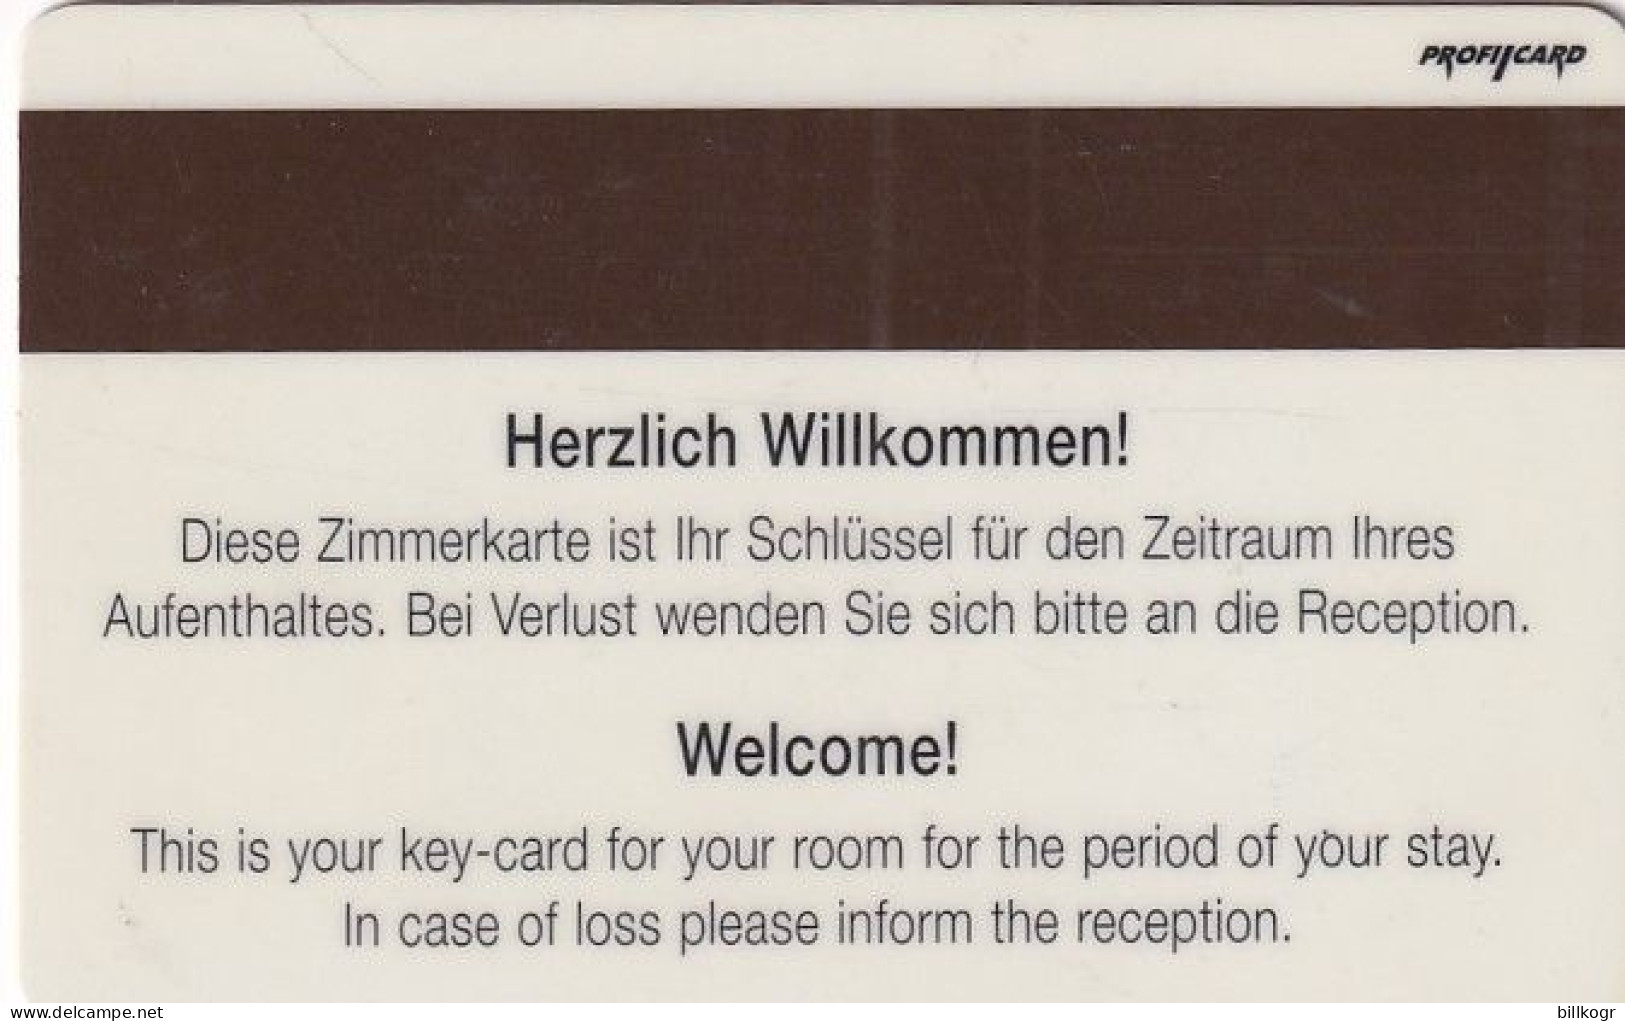 AUSTRIA - Sonne/Activ Sunny Hotel, Hotel Keycard, Used - Hotelsleutels (kaarten)